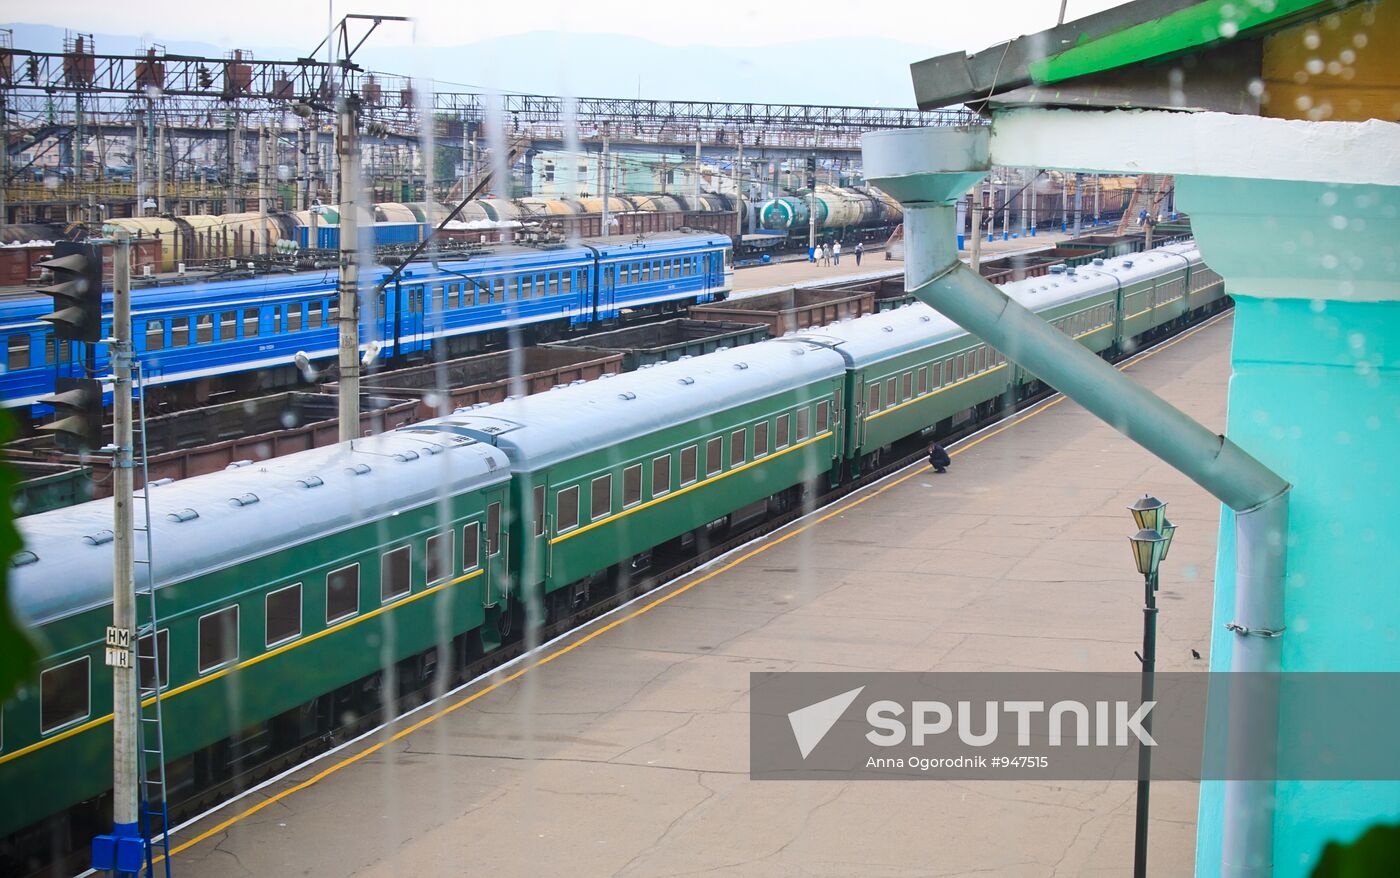 N. Korean leader Kim Jong-il arrives in Buryatia on train